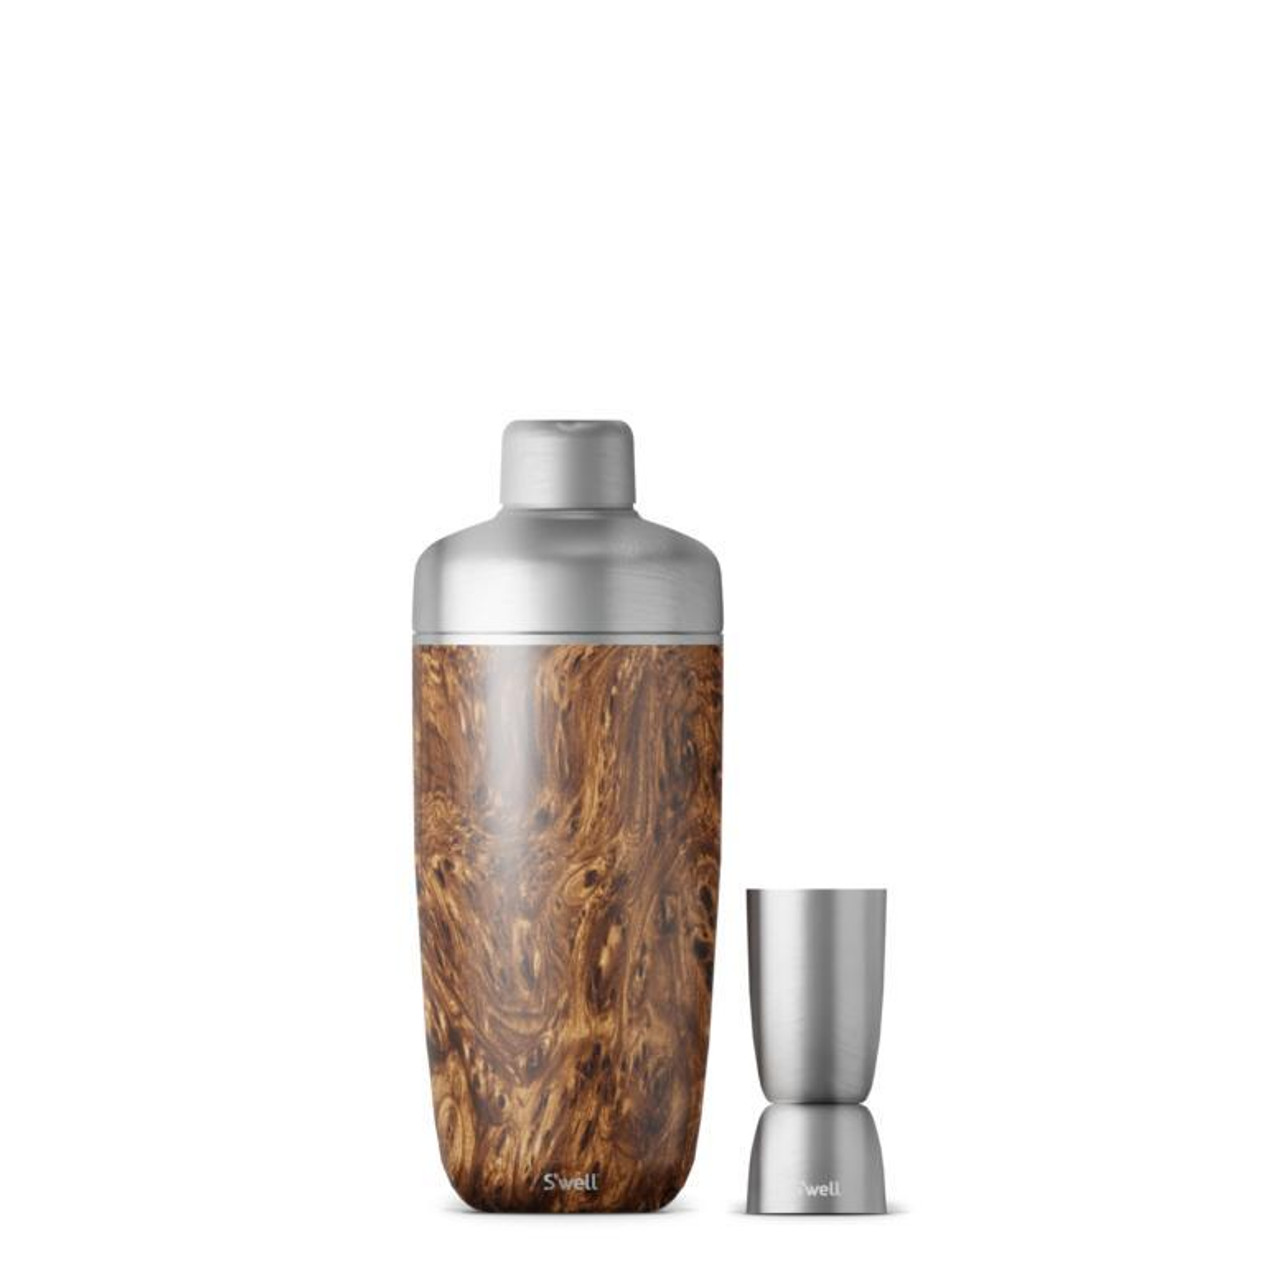 S'well- Stainless Steel Water Bottle - Teakwood: 25oz